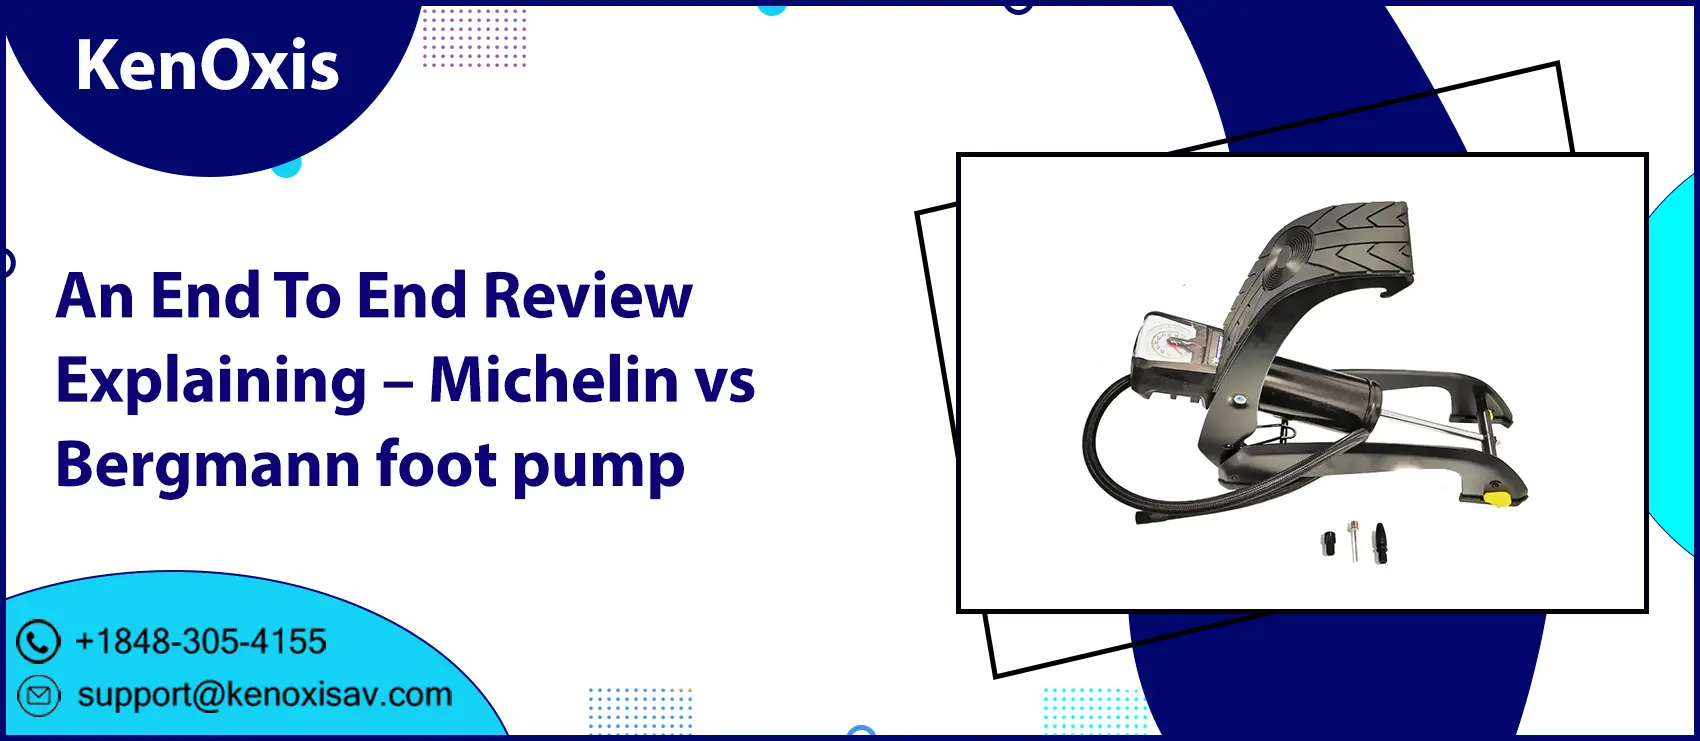 An End To End Review Explaining – Michelin vs Bergmann foot pump